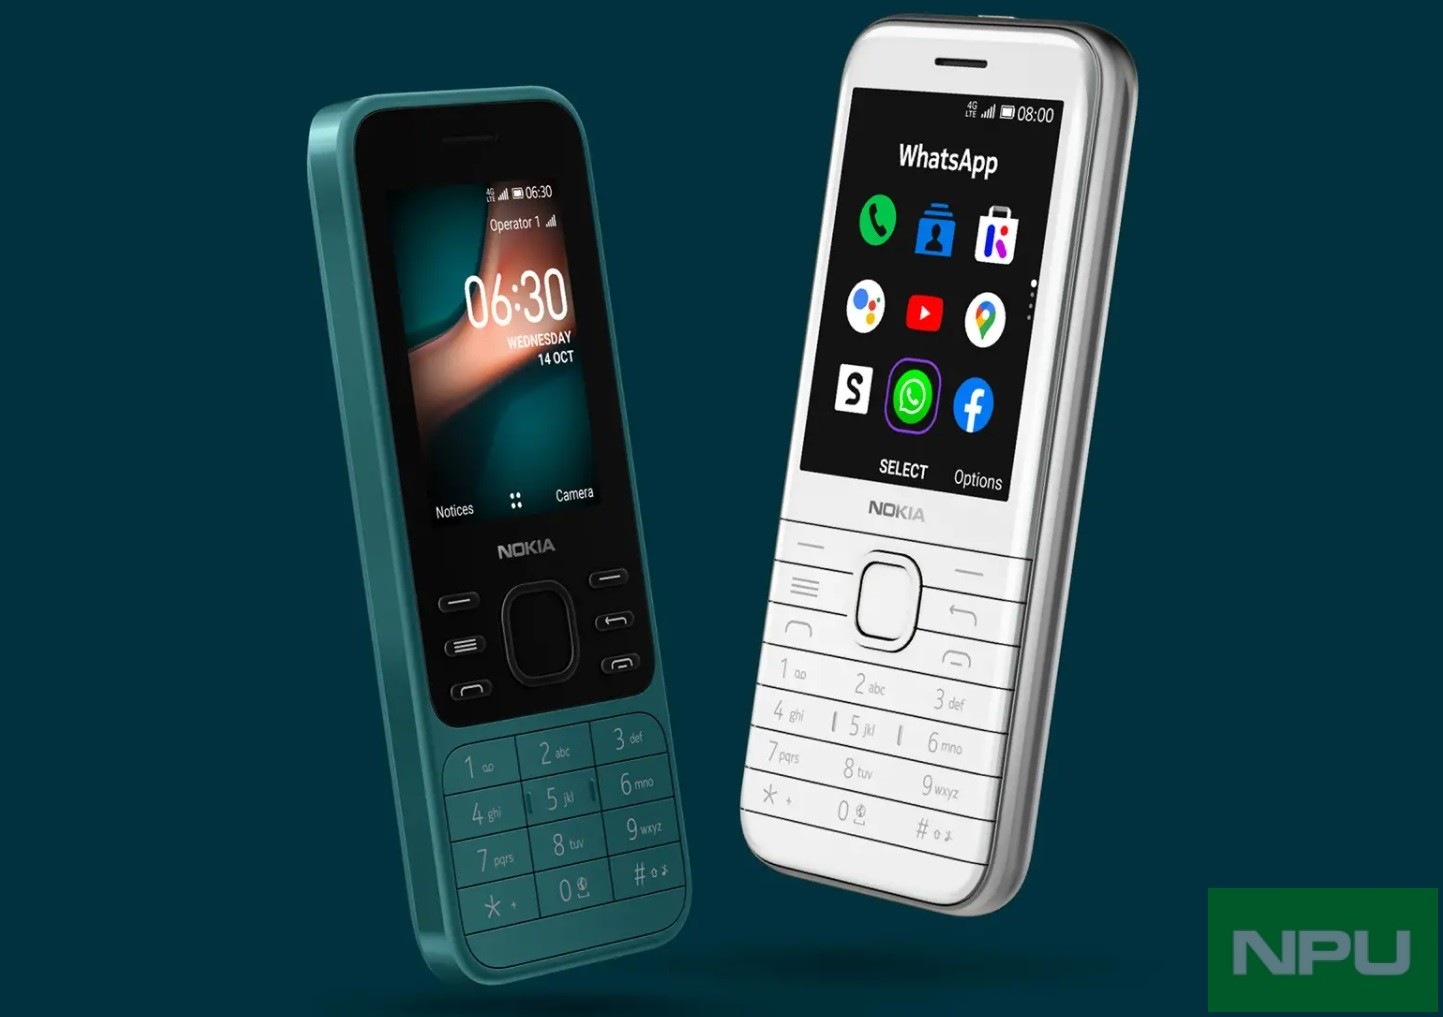 Nokia 6300 4G & Nokia 8000 4G are official now. Details inside -  Nokiapoweruser